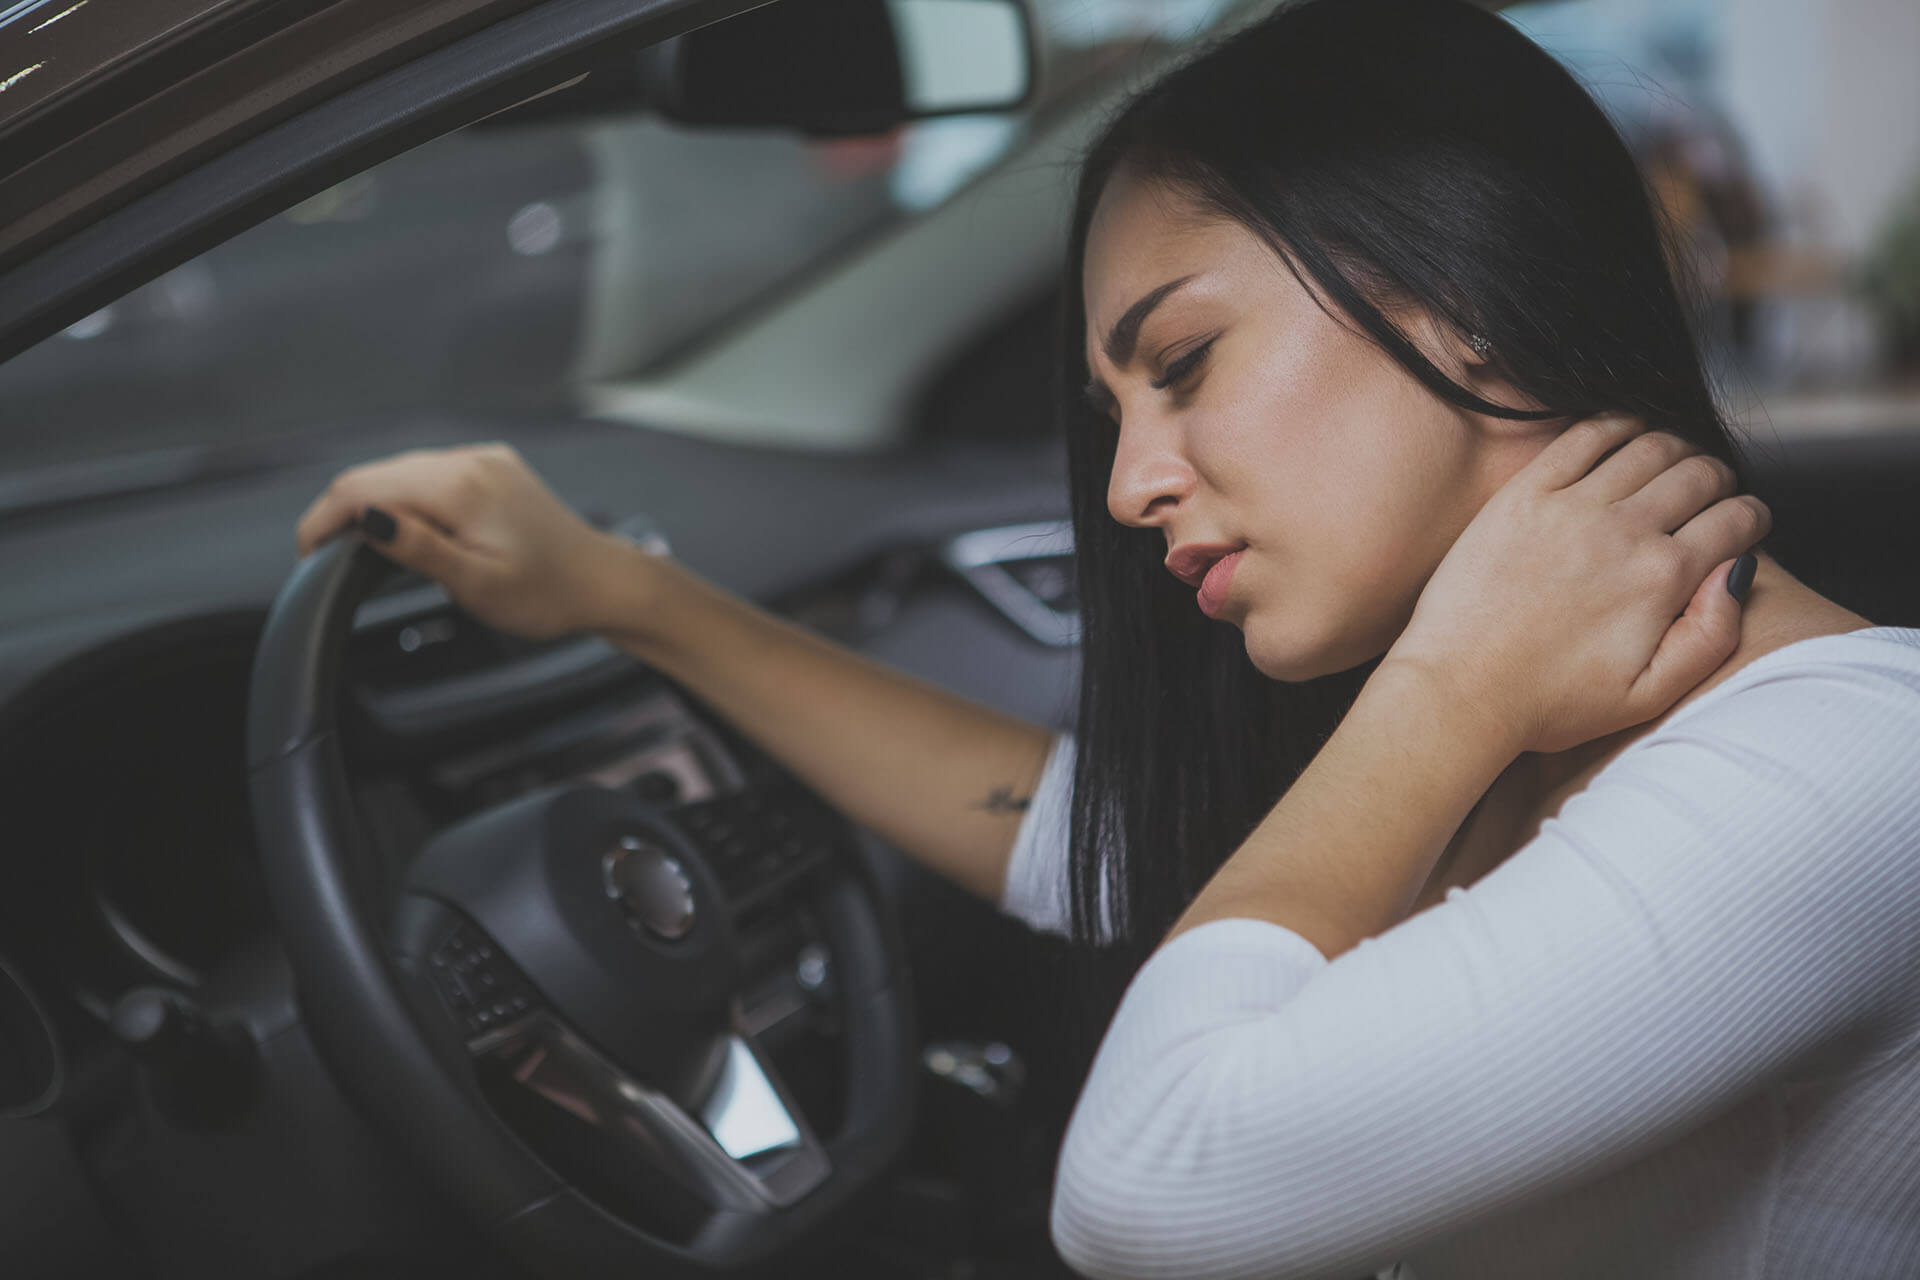 Female driver having terrible neck pain after whiplash injury in car crash